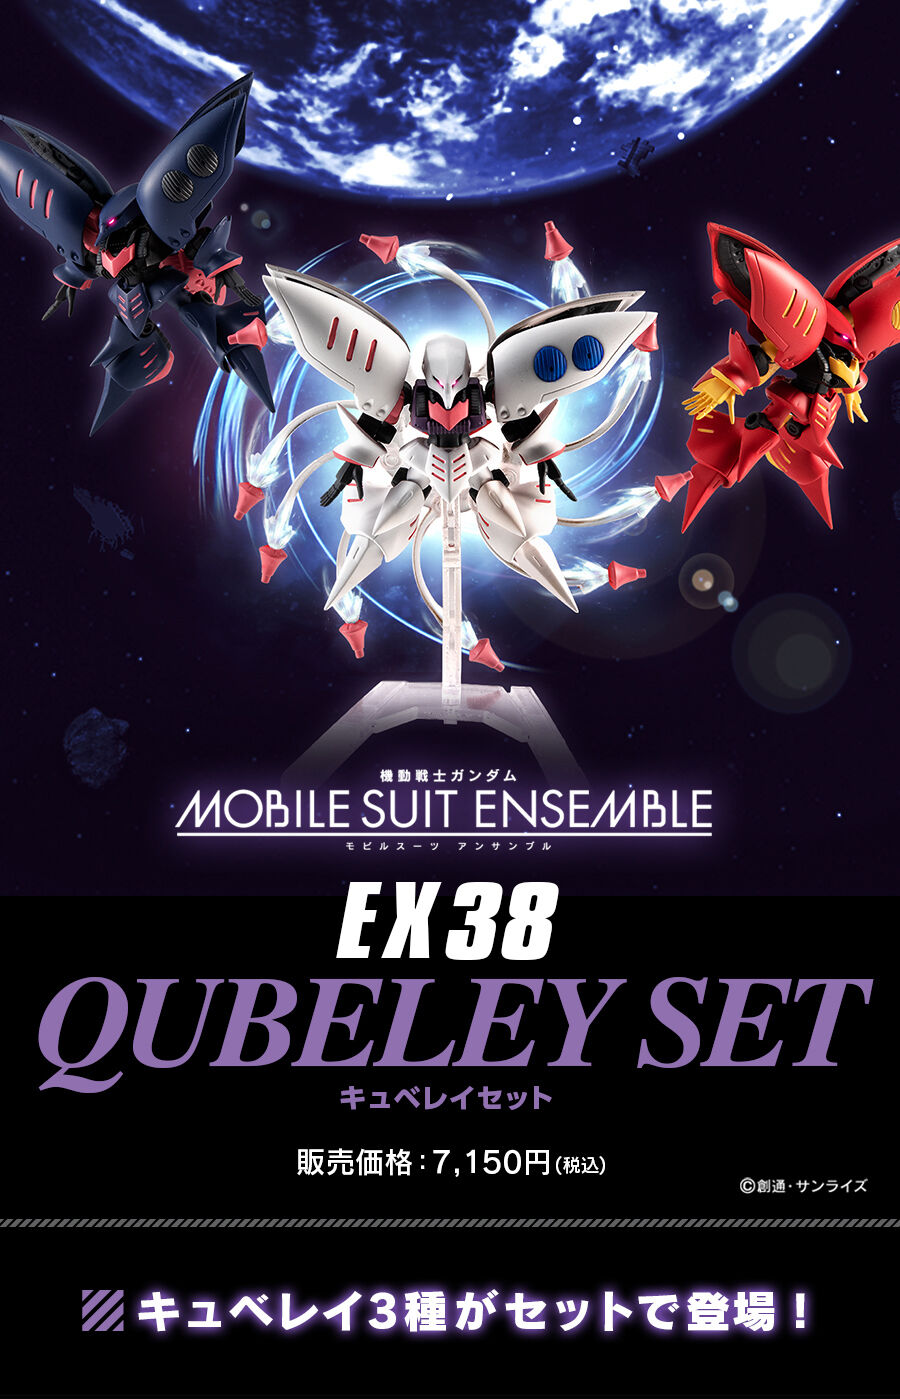 MS Ensemble EX38 AMX-004 Qubeley set